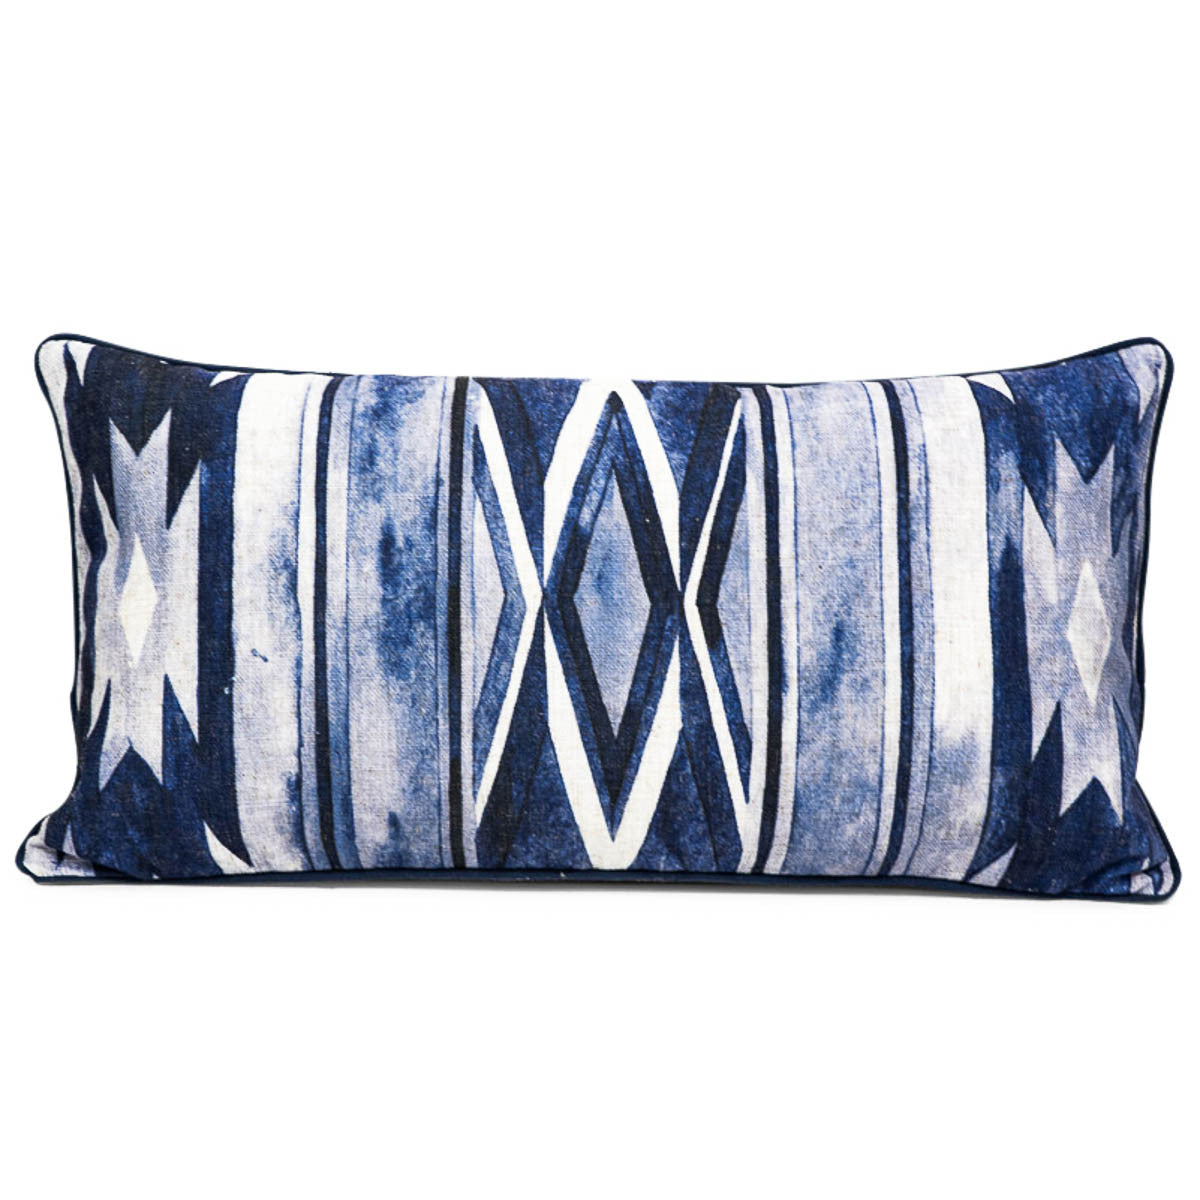 Southwest Lumbar Pillow in Navy Blue - ModShop1.com